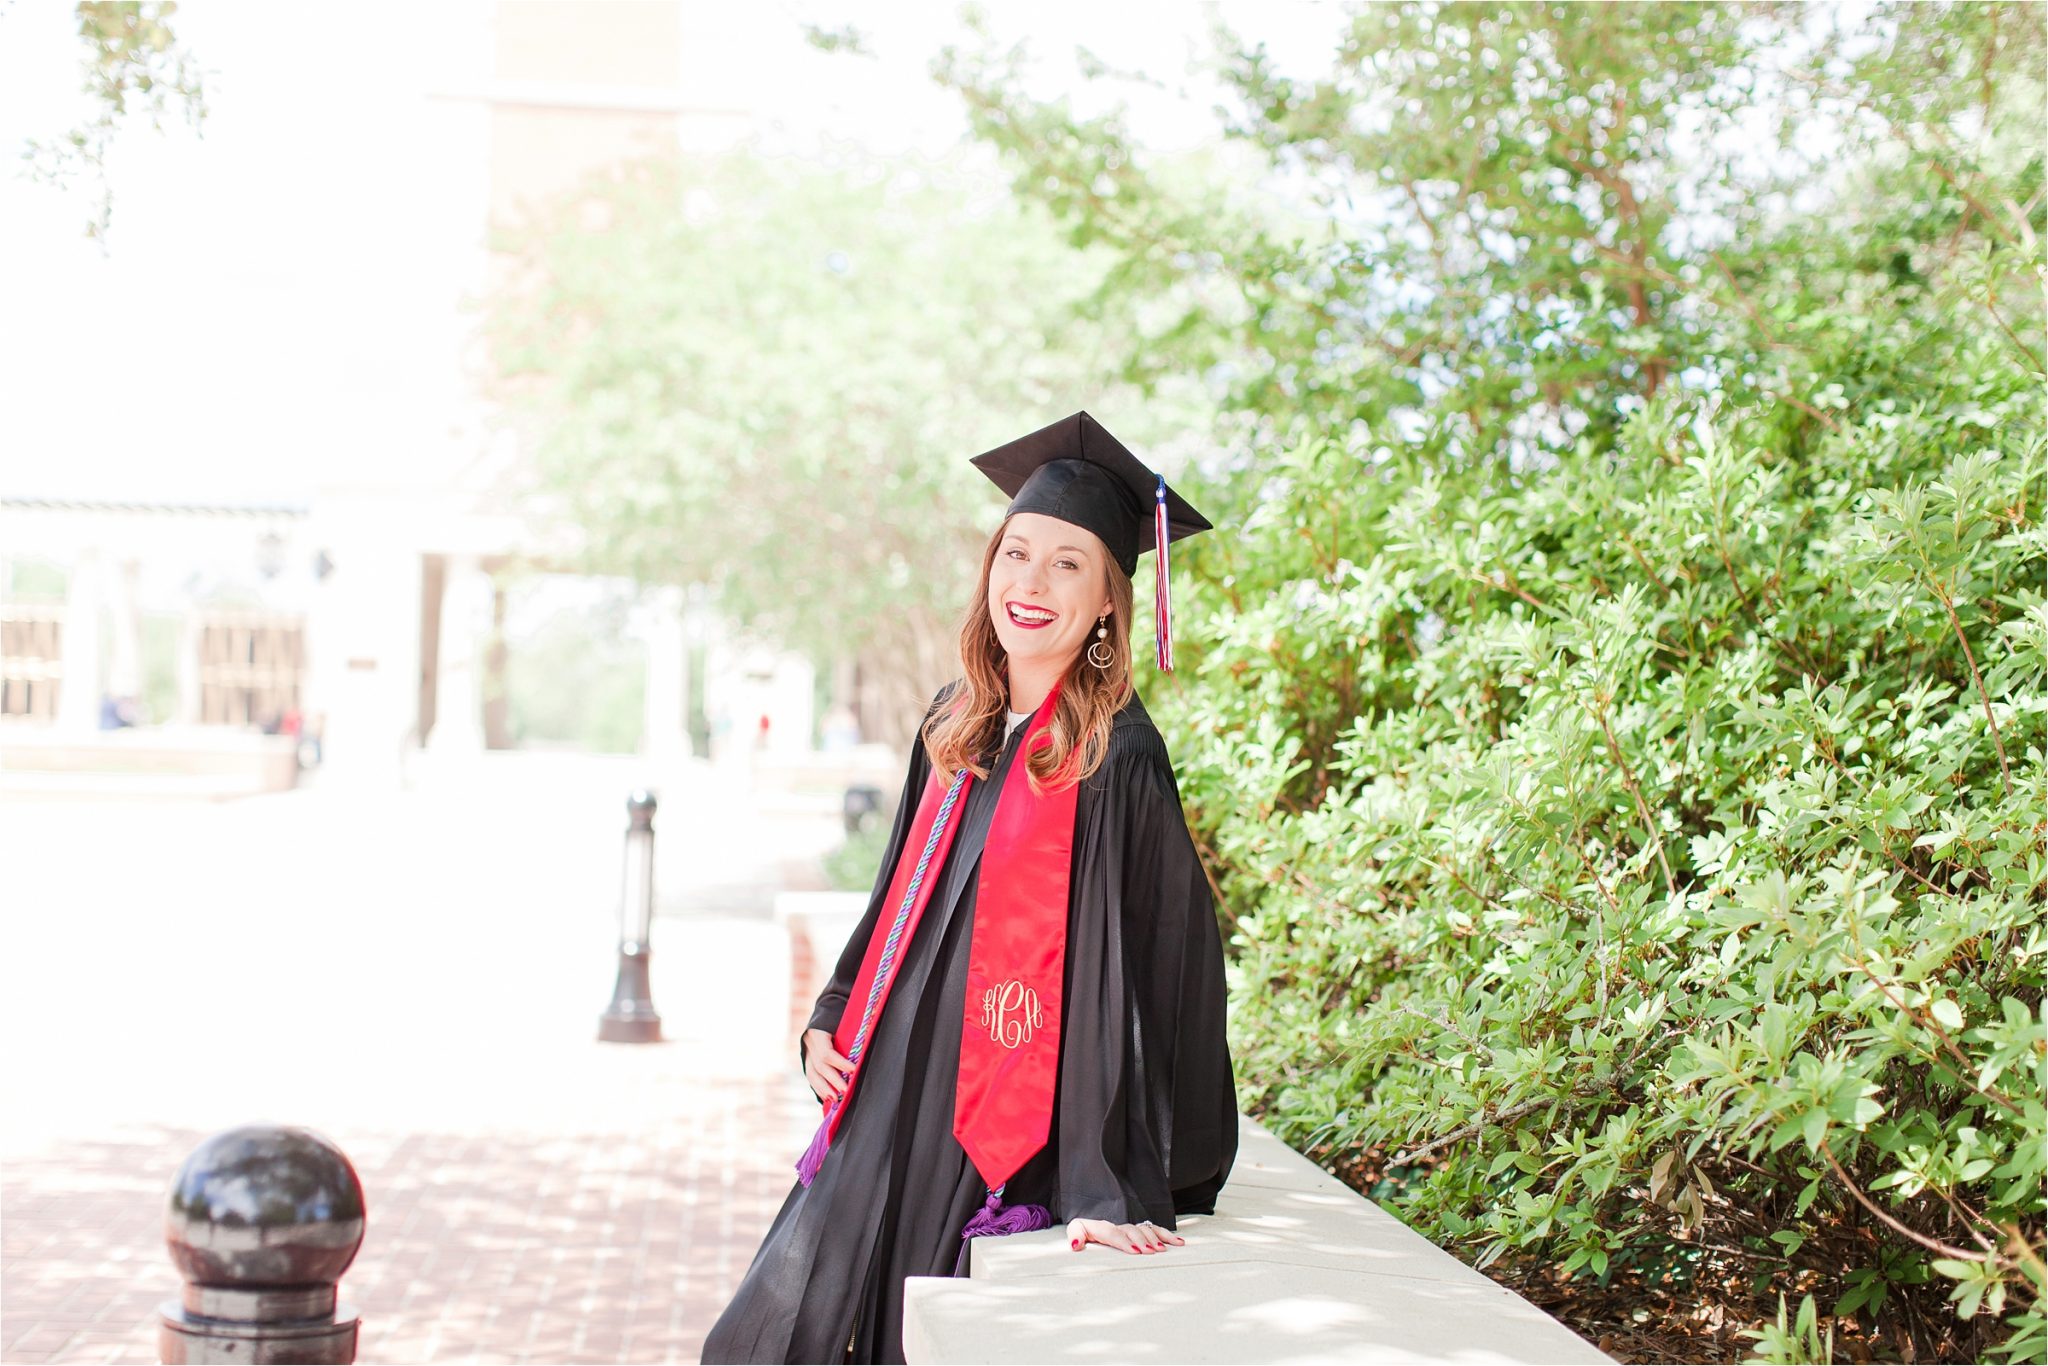 Graduating The University of South Alabama